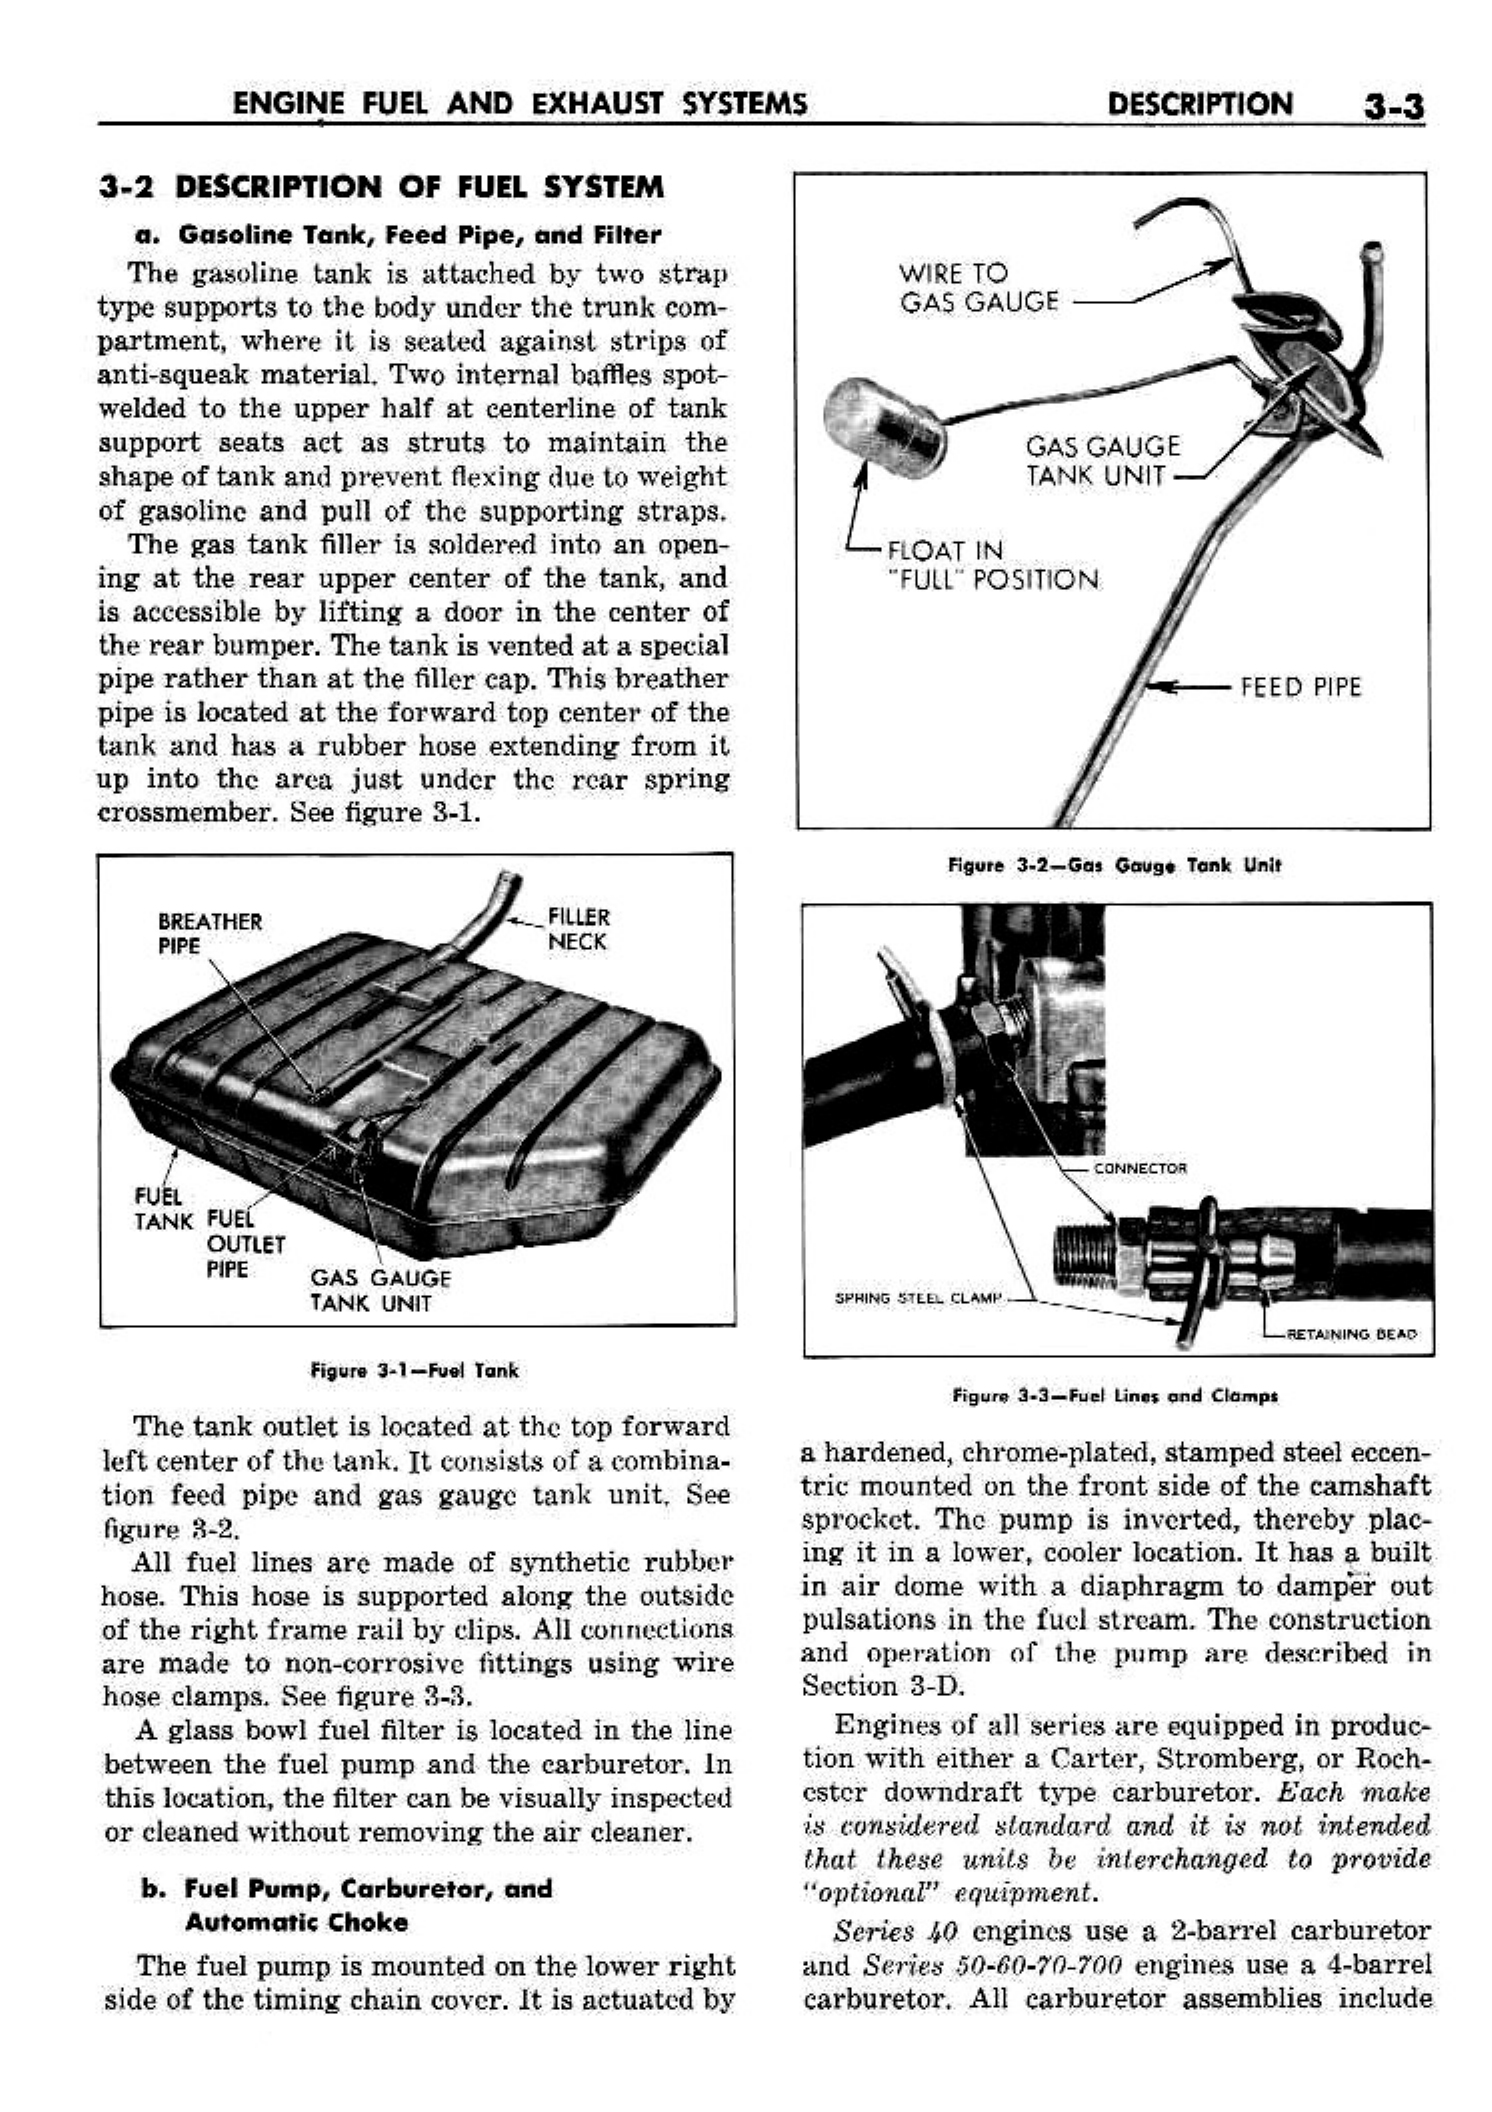 n_04 1958 Buick Shop Manual - Engine Fuel & Exhaust_3.jpg